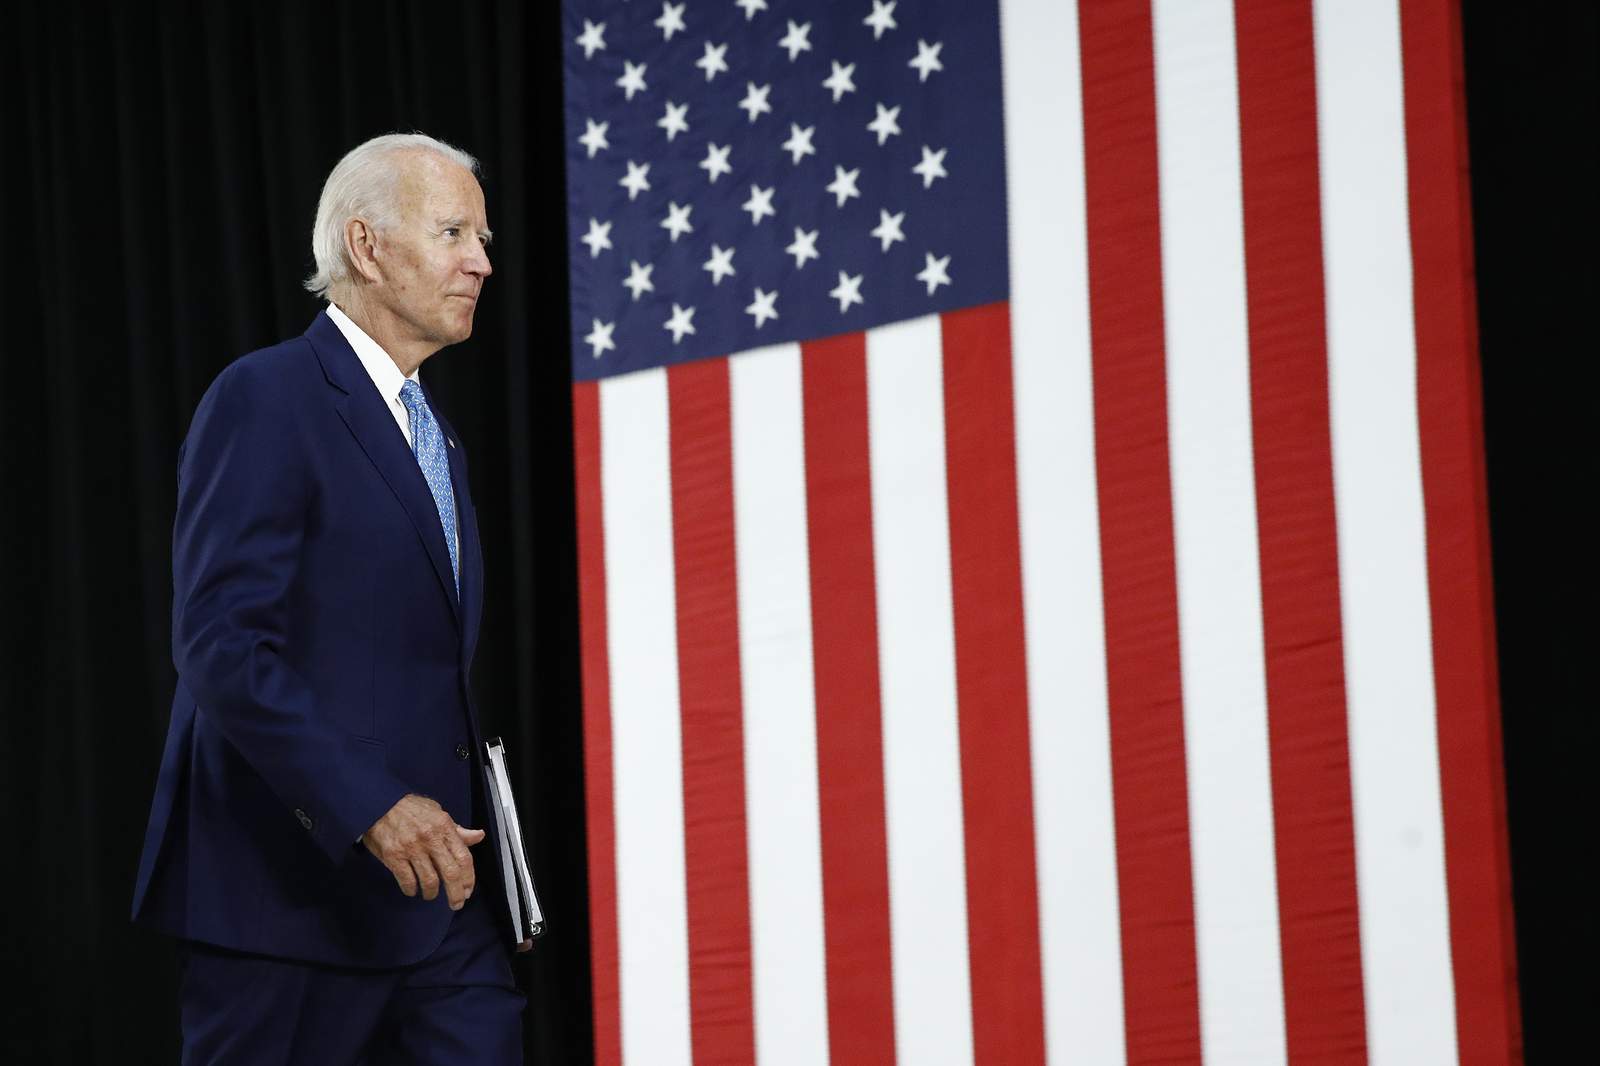 Ex-Bush officials launch super PAC backing Biden over Trump